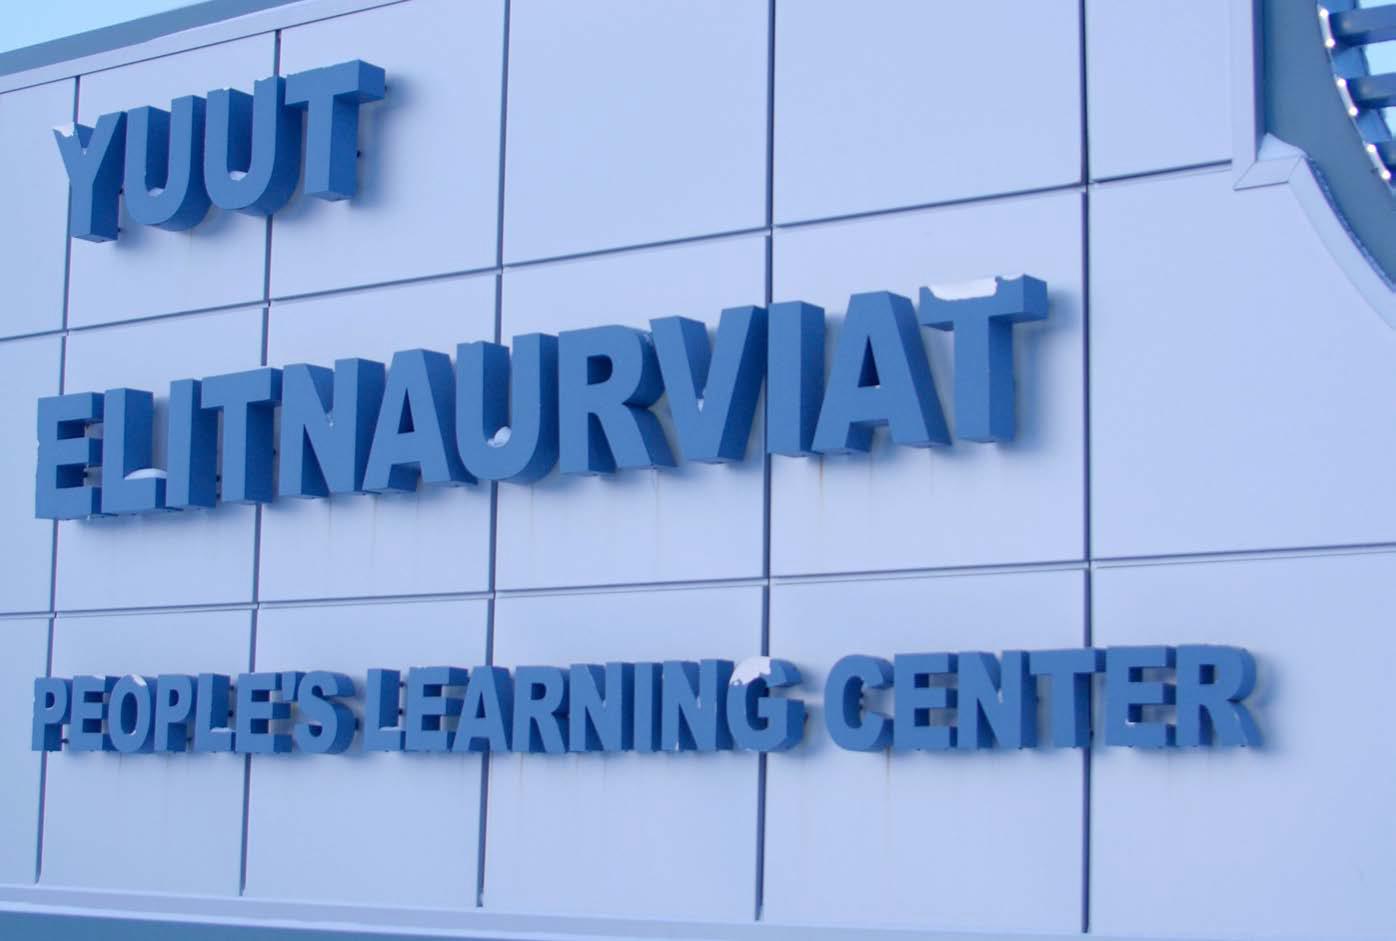 Yuut Elitnaurviat "People's Learning Center"